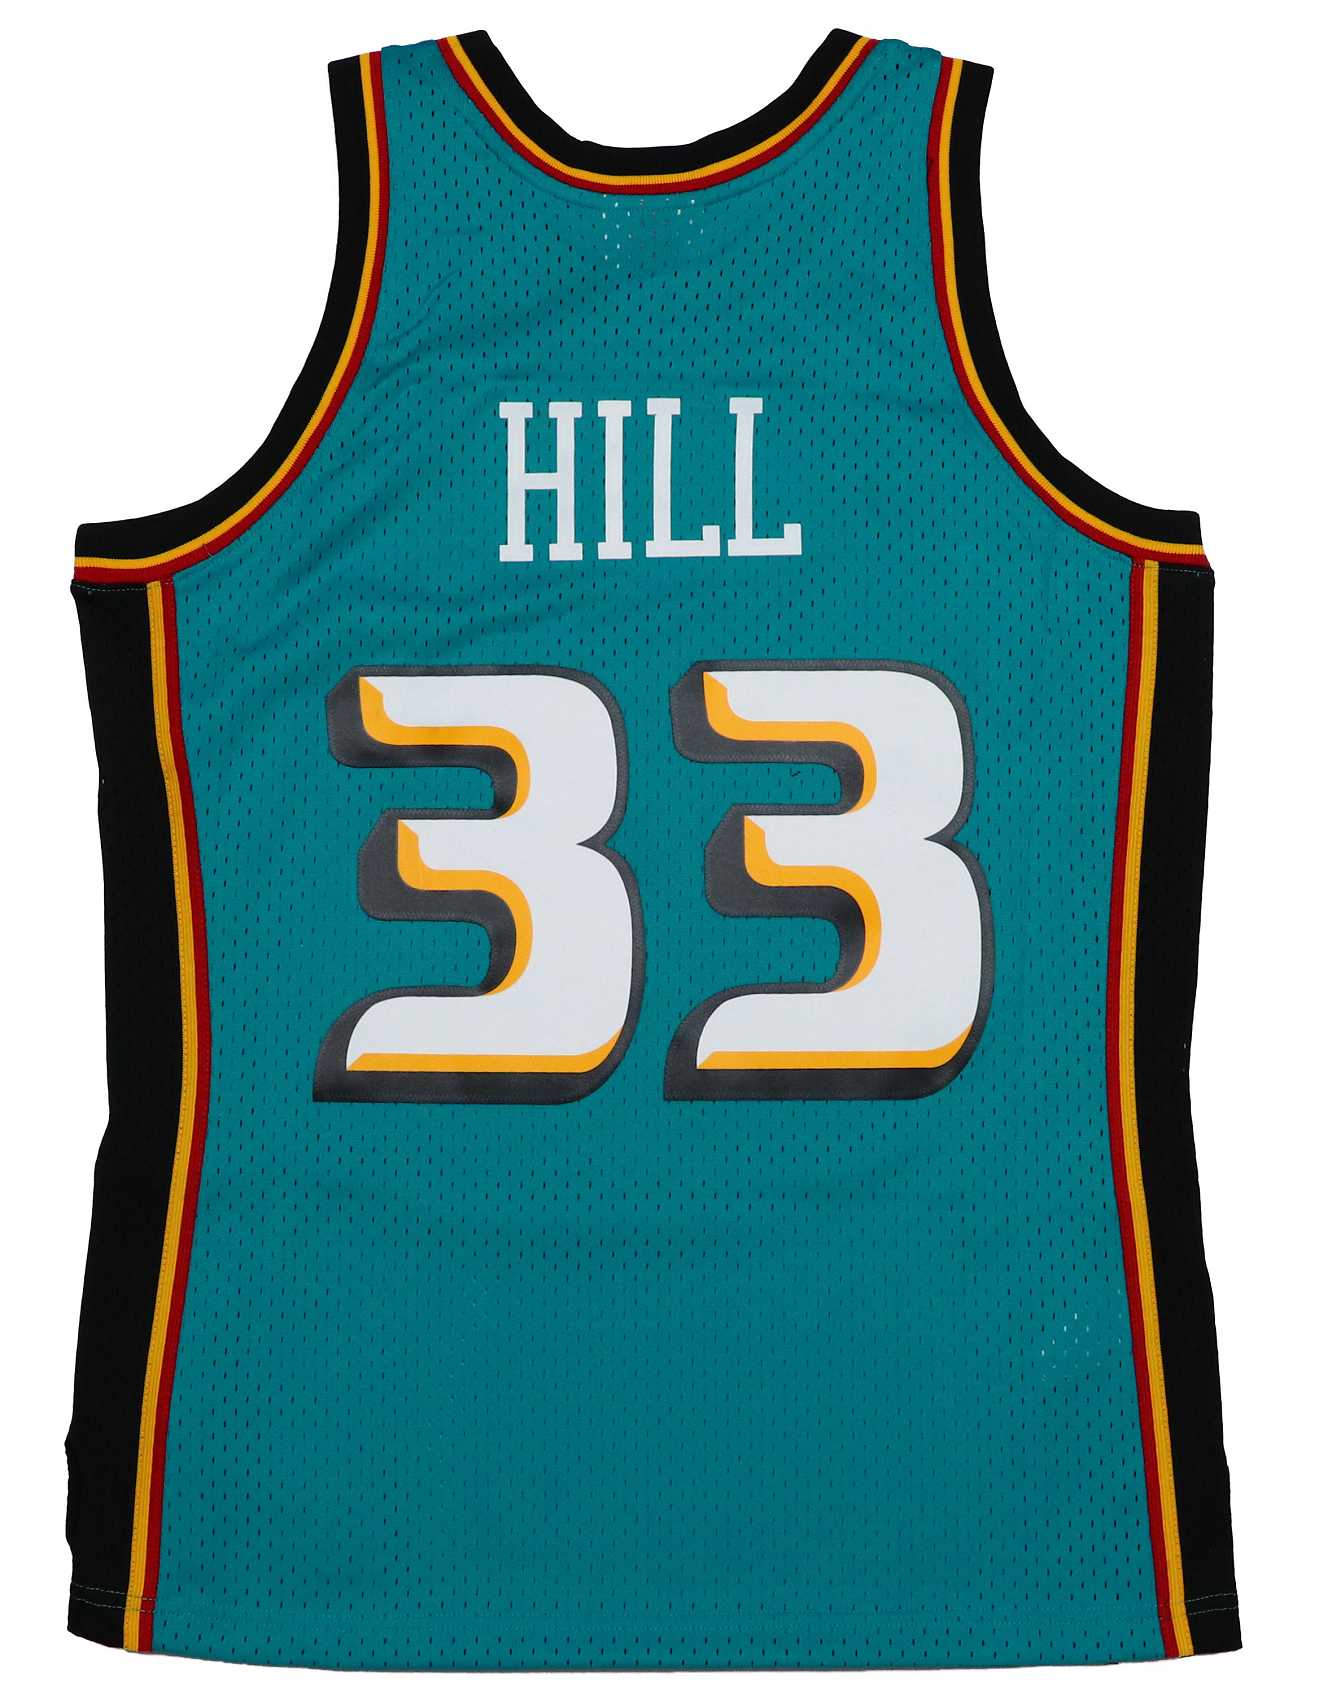 Grant Hill #33 Detroit Pistons NBA Swingman Mitchell & Ness